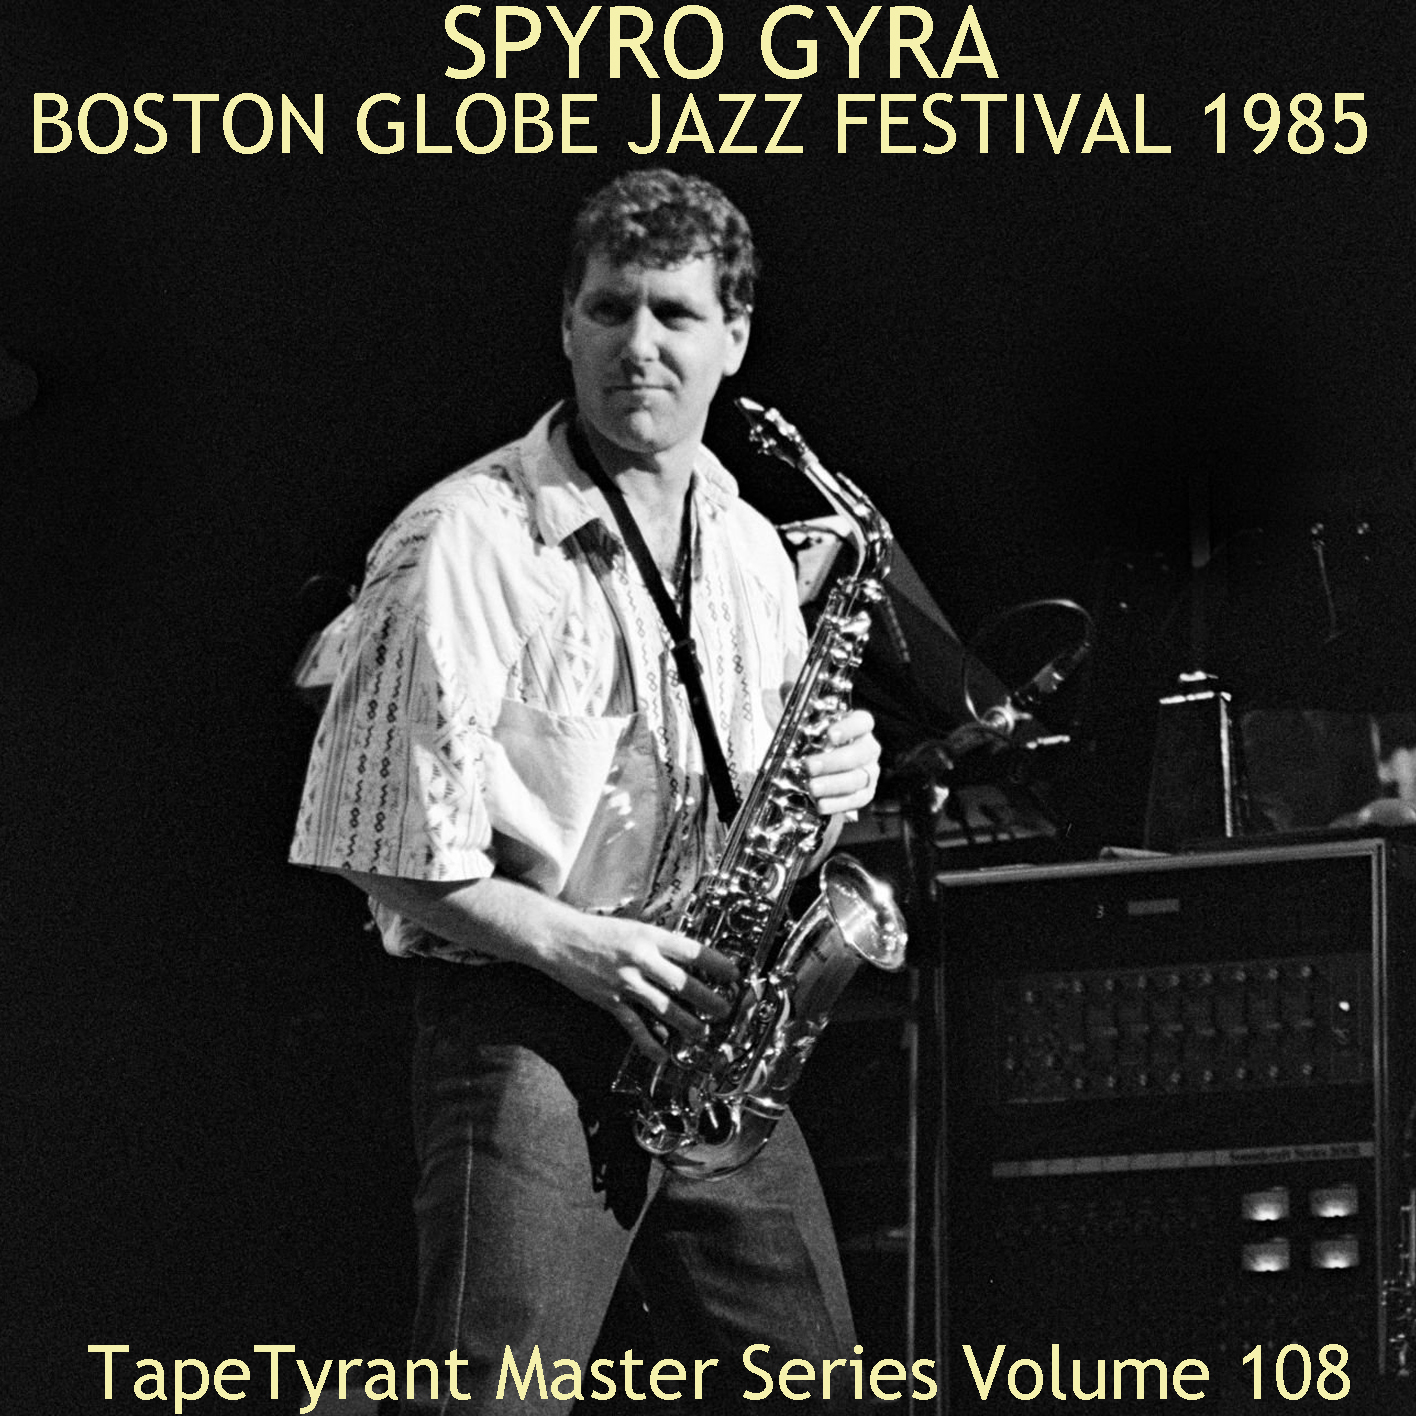 SpyroGyra1985-03-22BostonGlobeJazzFestivalOrpheumTheatreMA (2).jpg